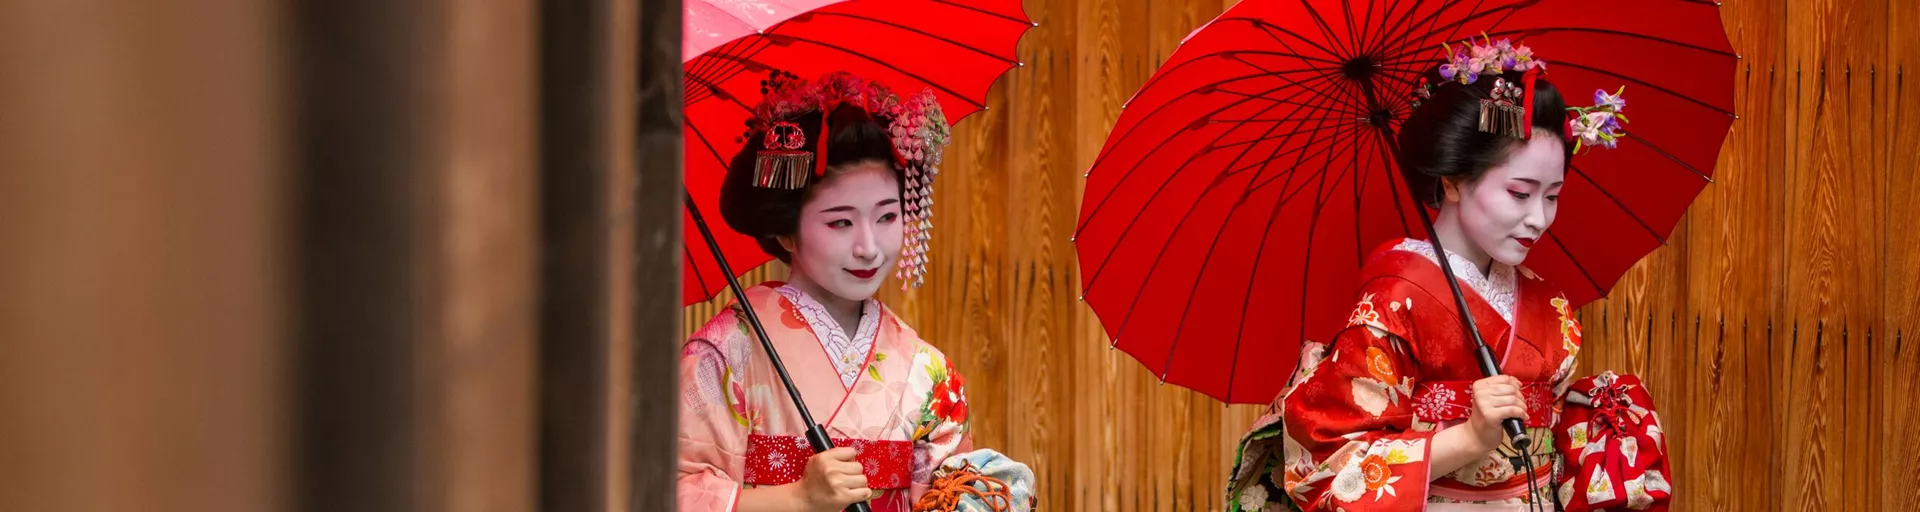 Maiko Apprentice Geisha Japanese Women In Traditional Kimonos